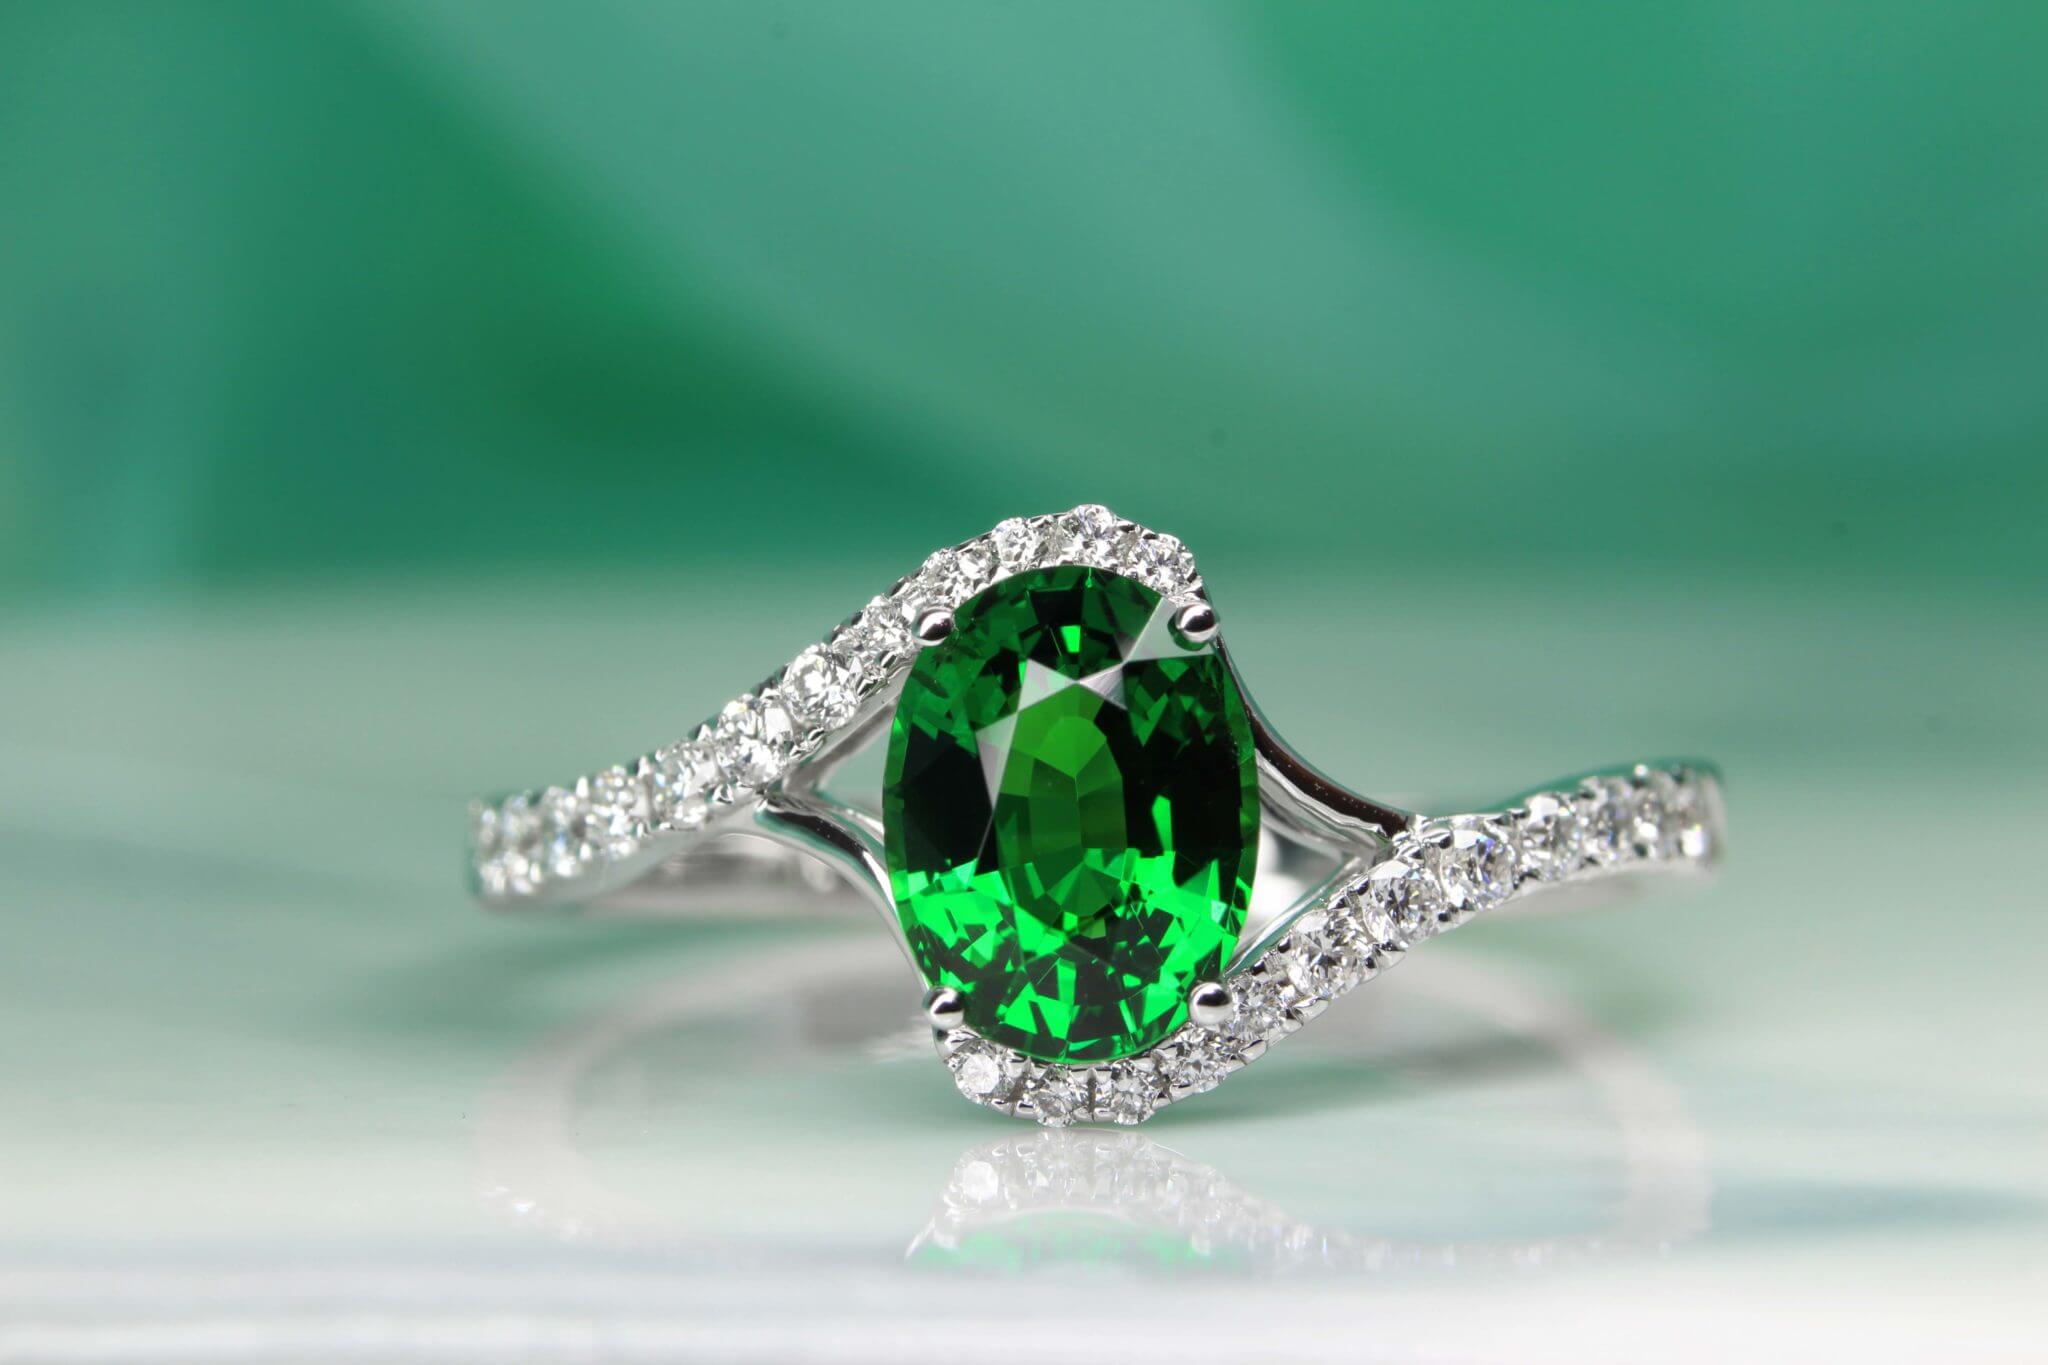 Customised a personalised proposal ring with coloured gemstone - Tsavorite Gemstone Ring | Local Singapore bespoke Jewellery in personalised jewellery and wedding Ring with coloured gemstone